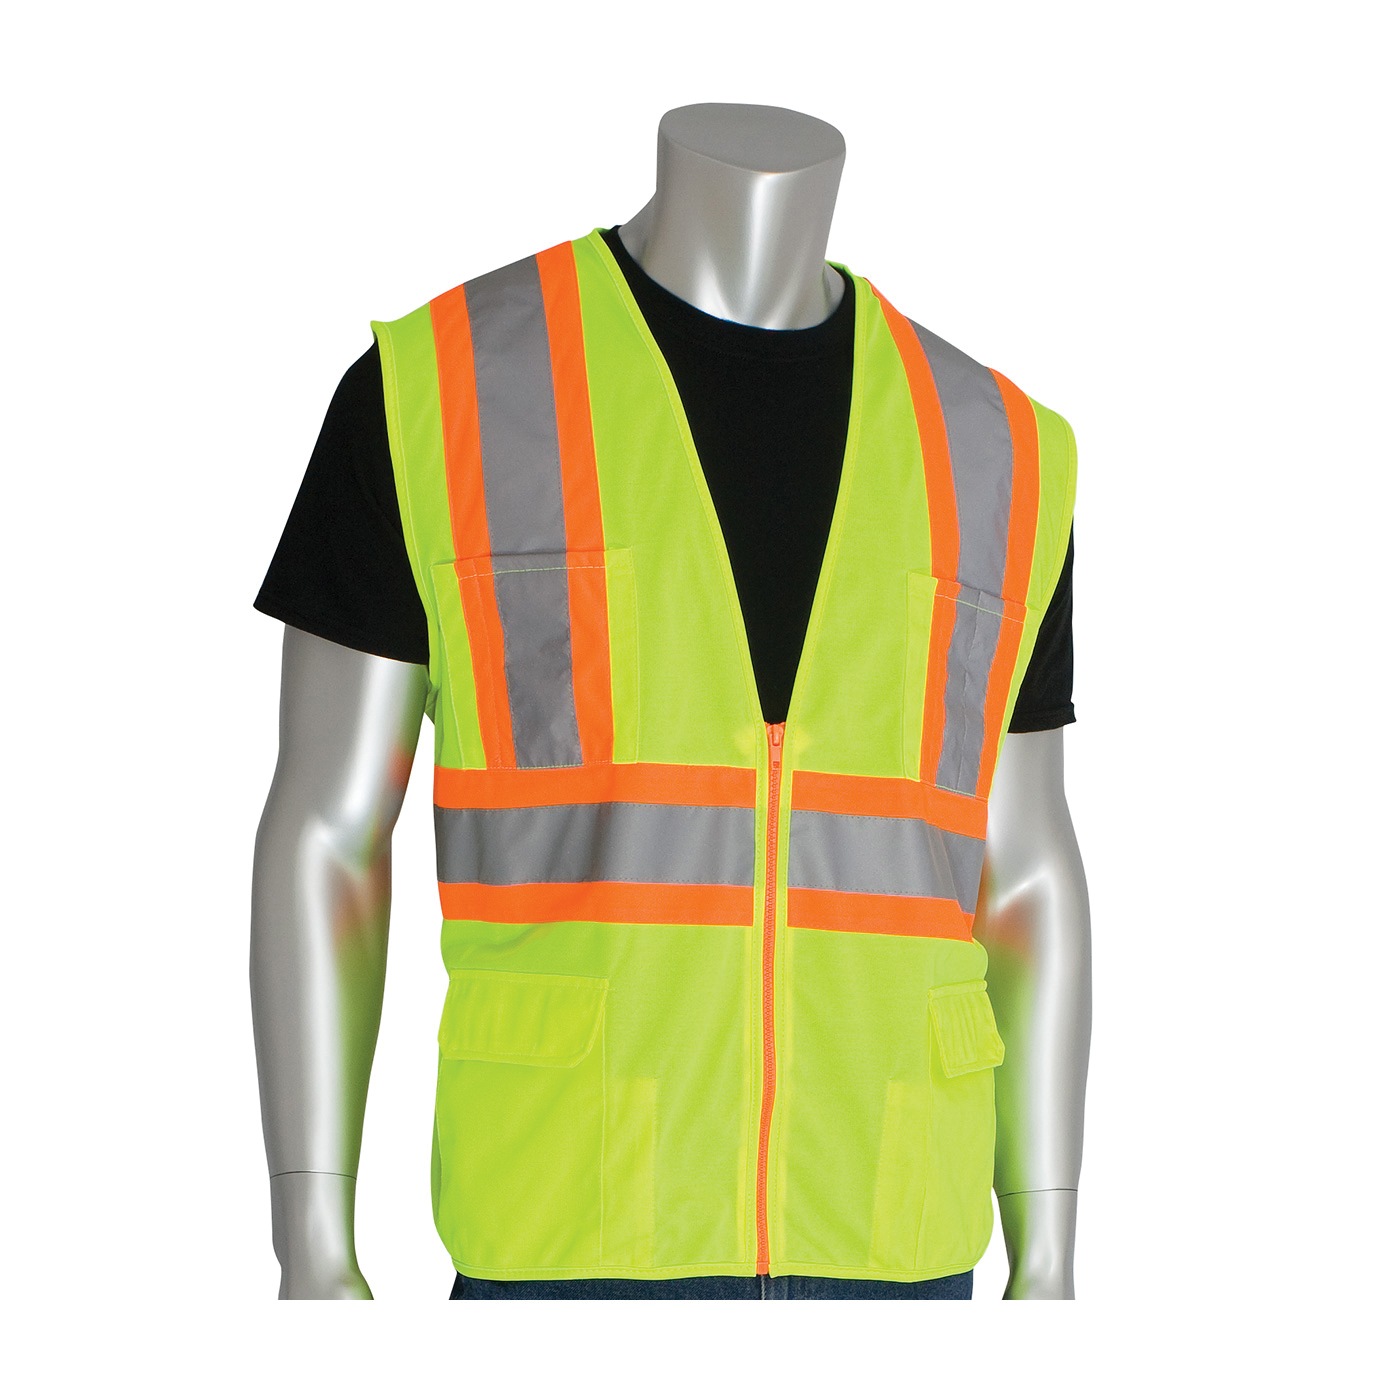 PIP® 302-MAPLY-XL 2-Tone Premium Surveyor Safety Vest, XL, Hi-Viz Lime Yellow, Polyester, Zipper Closure, 11 Pockets, ANSI Class: Class 2, Specifications Met: ANSI 107 Type R